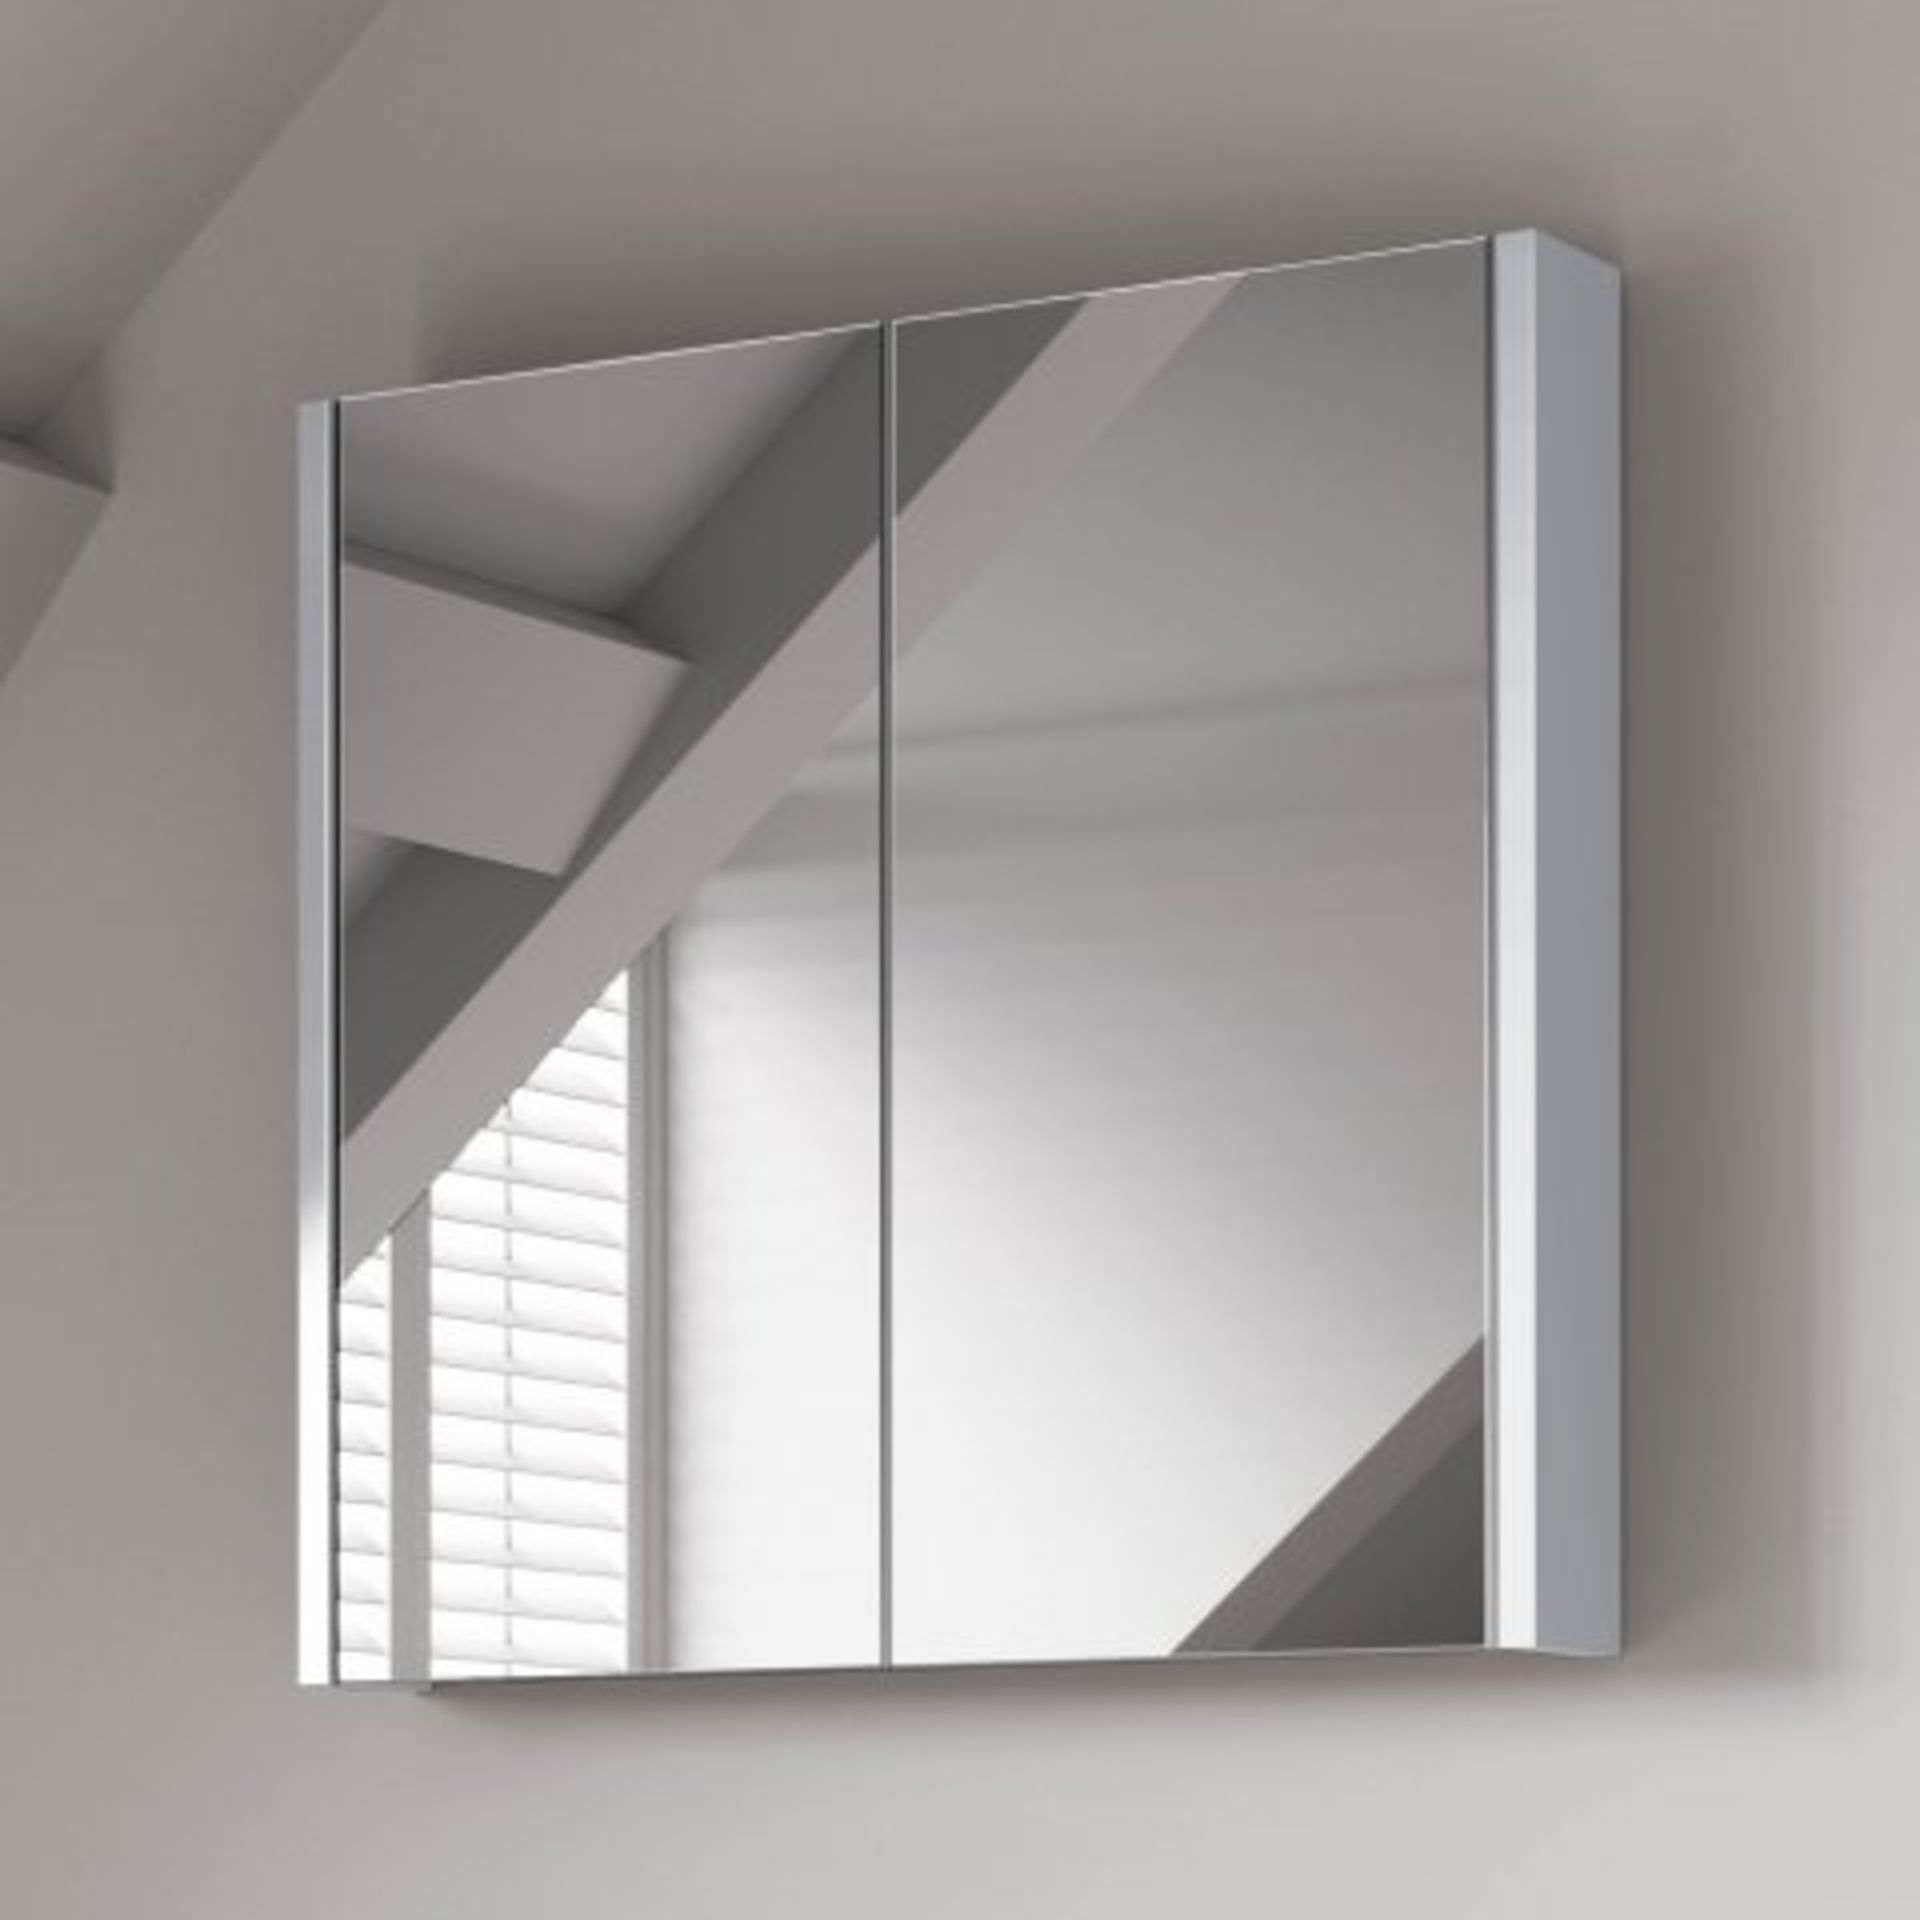 (V15) 600mm Gloss White Double Door Mirror Cabinet RRP £174.99 Our 600mm Gloss White Double Door